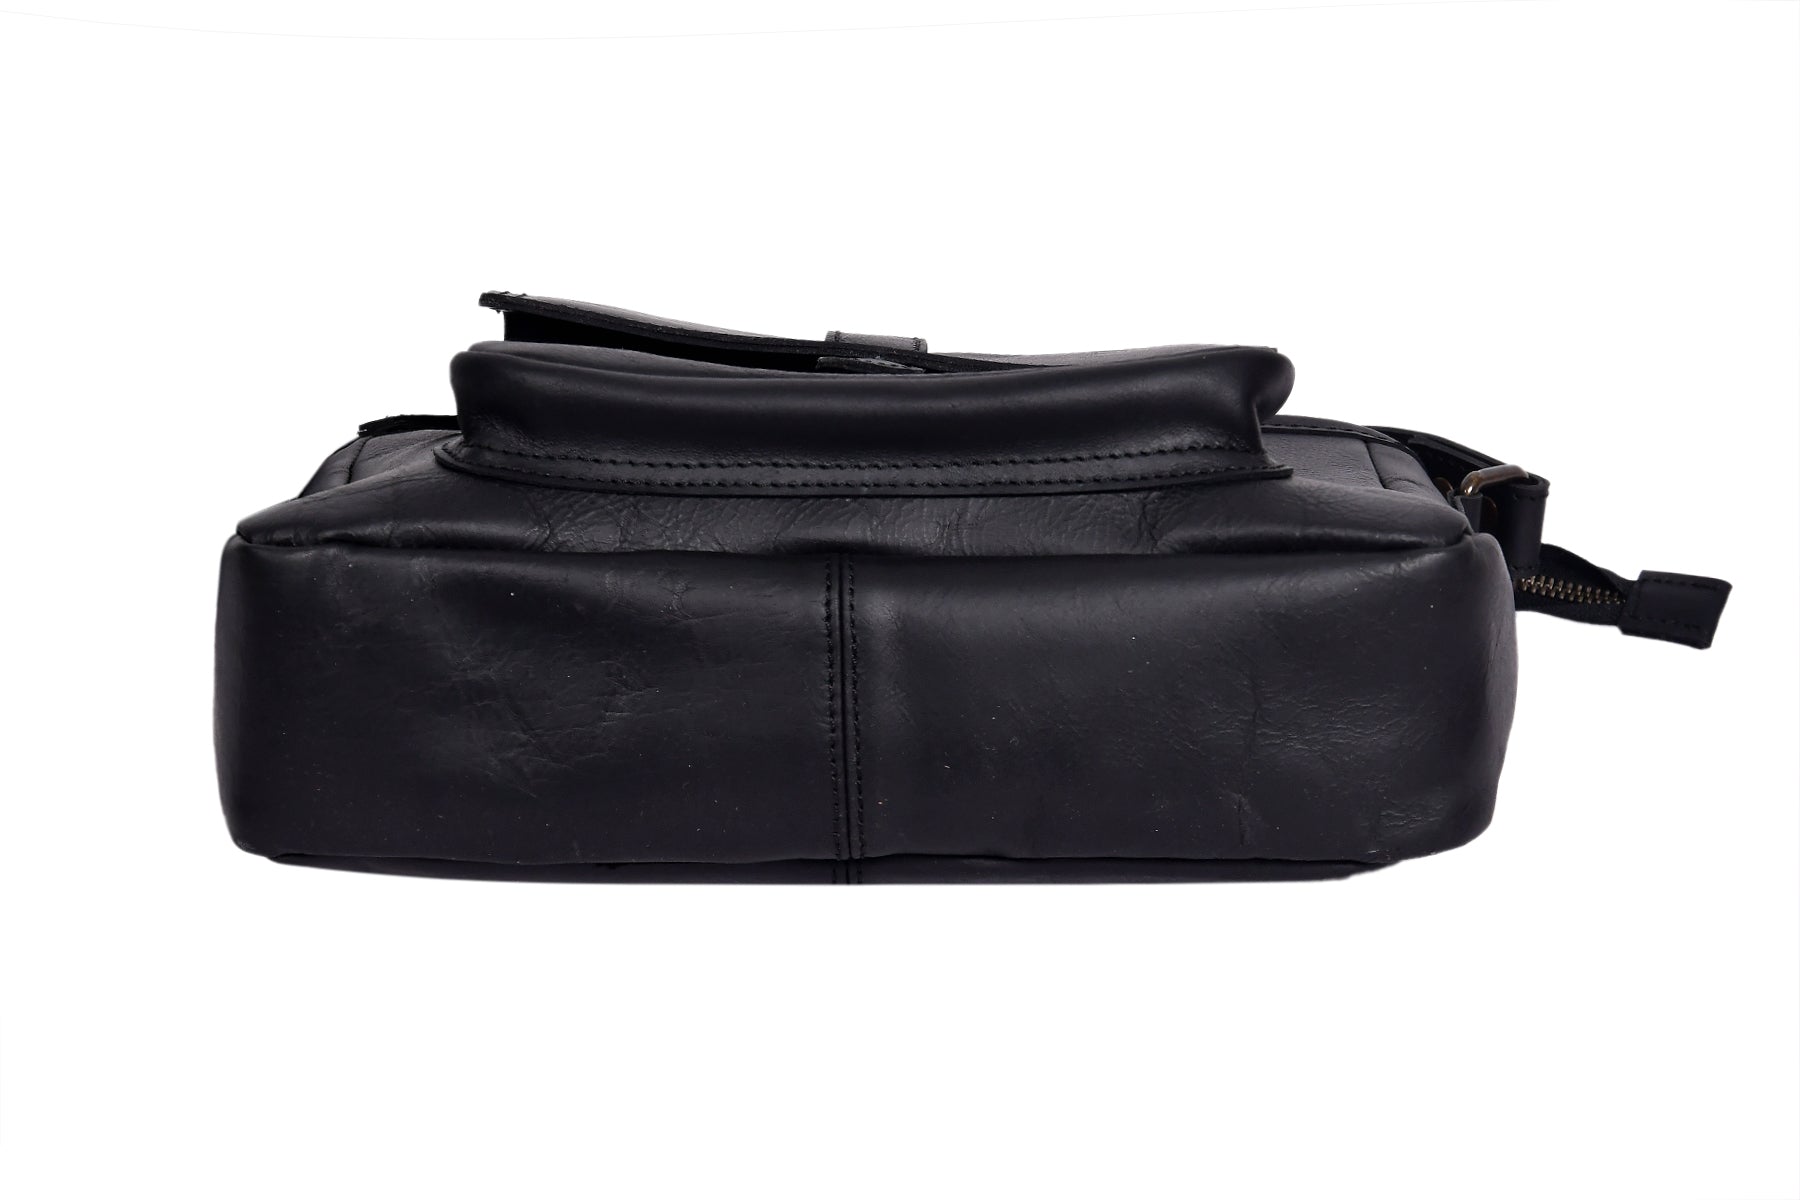 Elegance Redefined: Black Leather Sling Bag - Your Perfect Fashion Companion. - CELTICINDIA